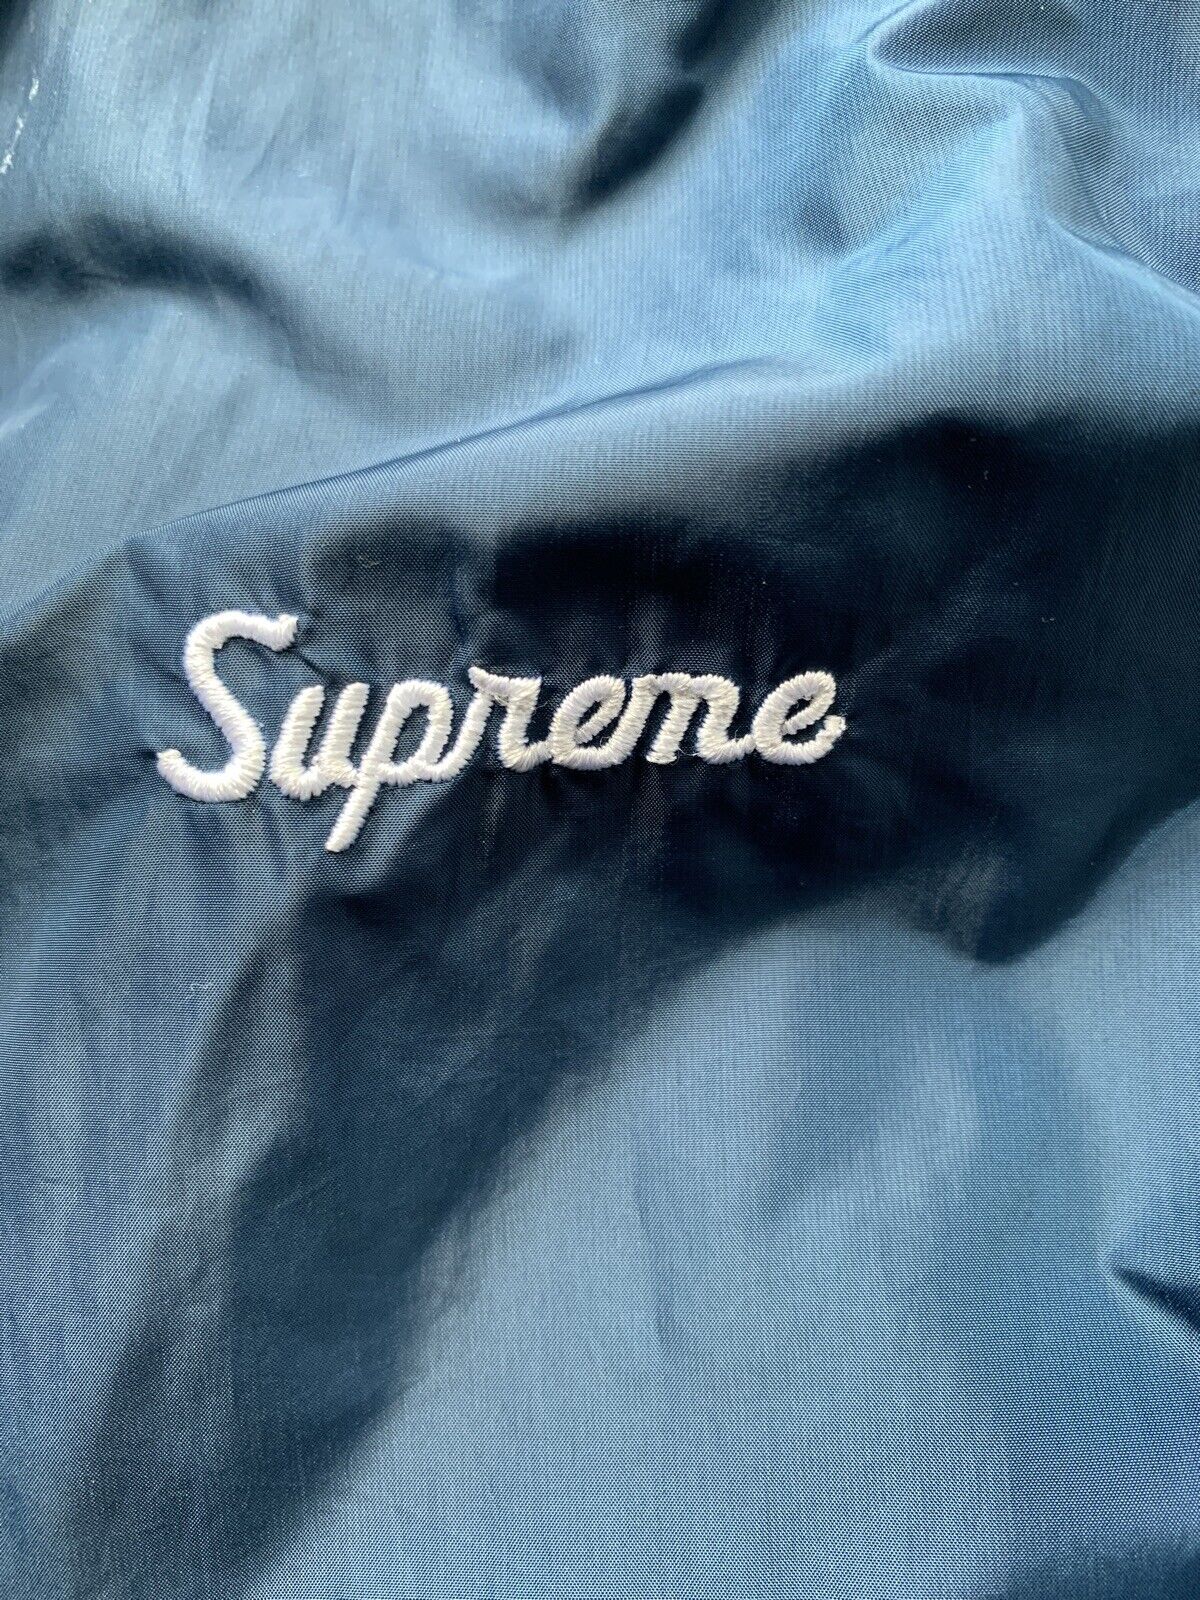 Supreme X Champion Coaches Jacket Size M 2011 | eBay